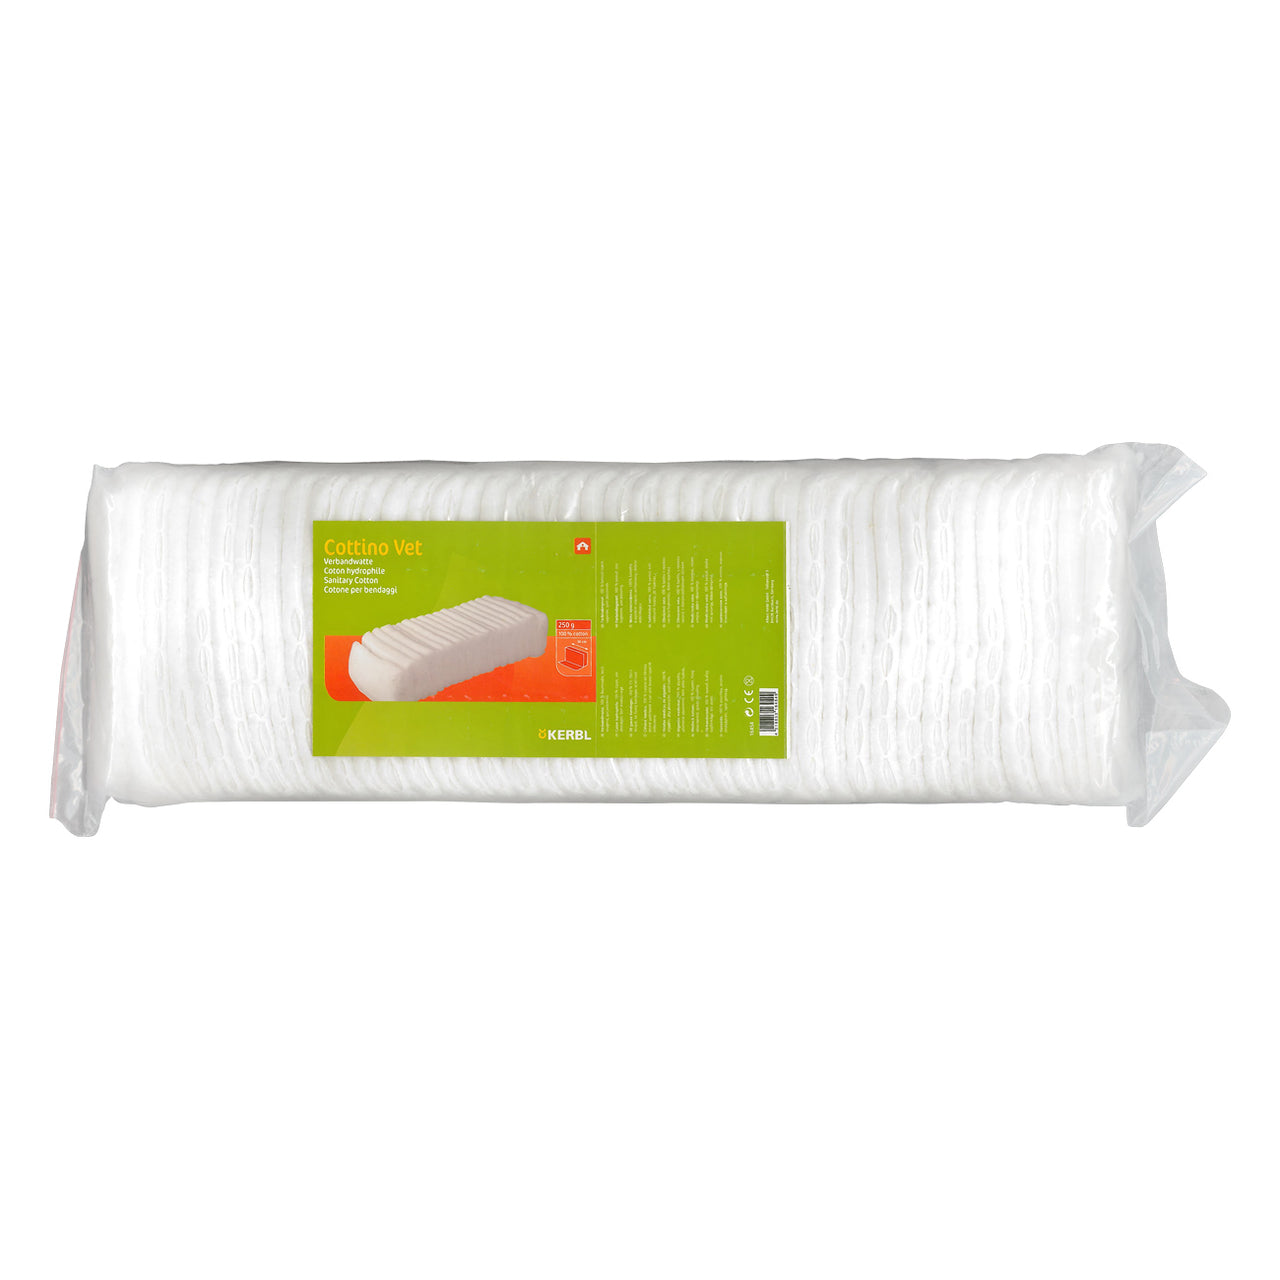 Kerbl Sanitary Cotton Cottino Vet 14Cm (250G) - Gauze Self-Adhering Wrap Bandage Cotton Pad Sanitary Cotton Kerbl - Canada